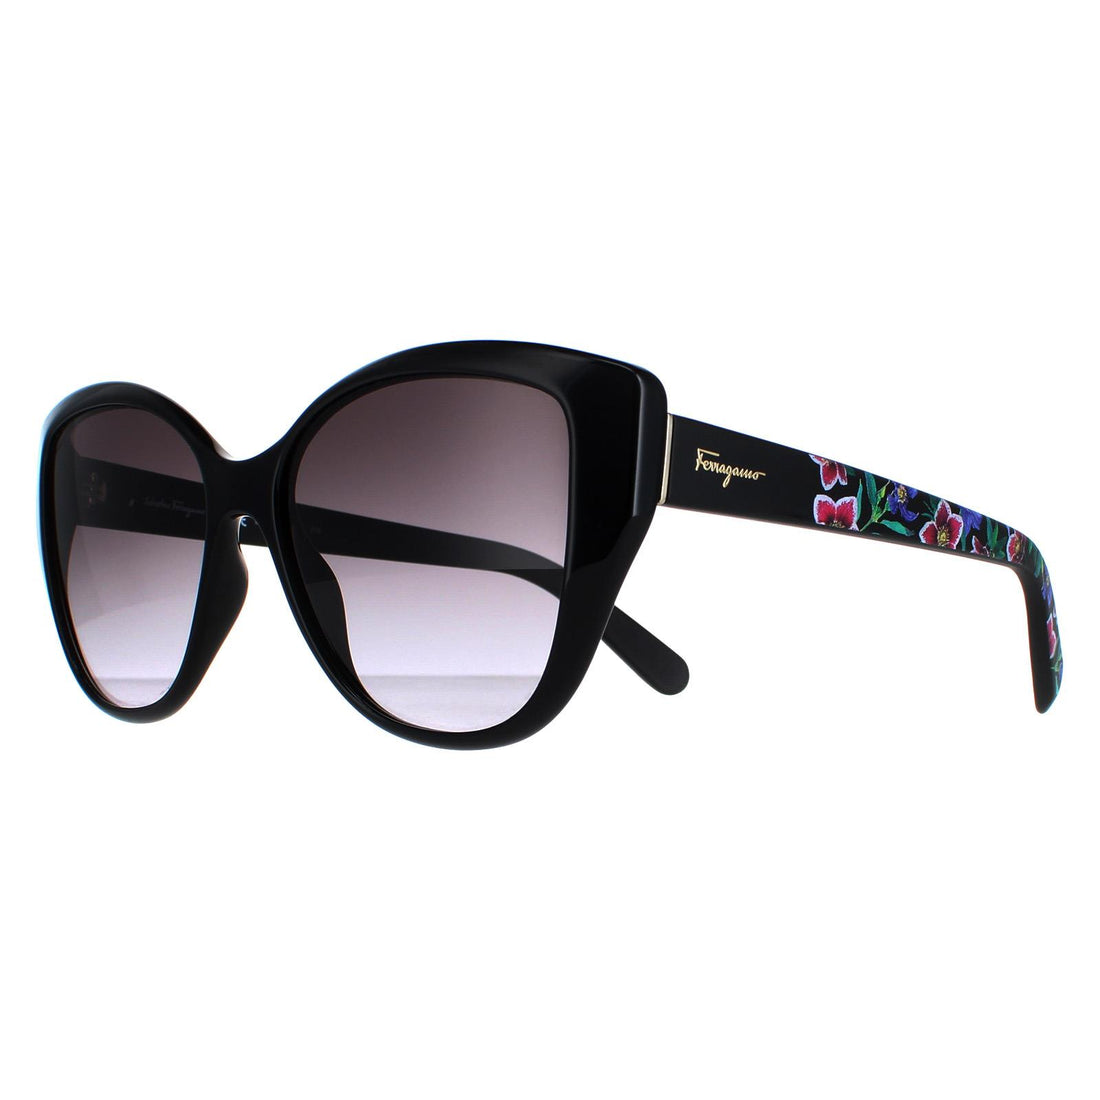 Salvatore Ferragamo Sunglasses SF912S 001 Black with Flower Print Grey Gradient